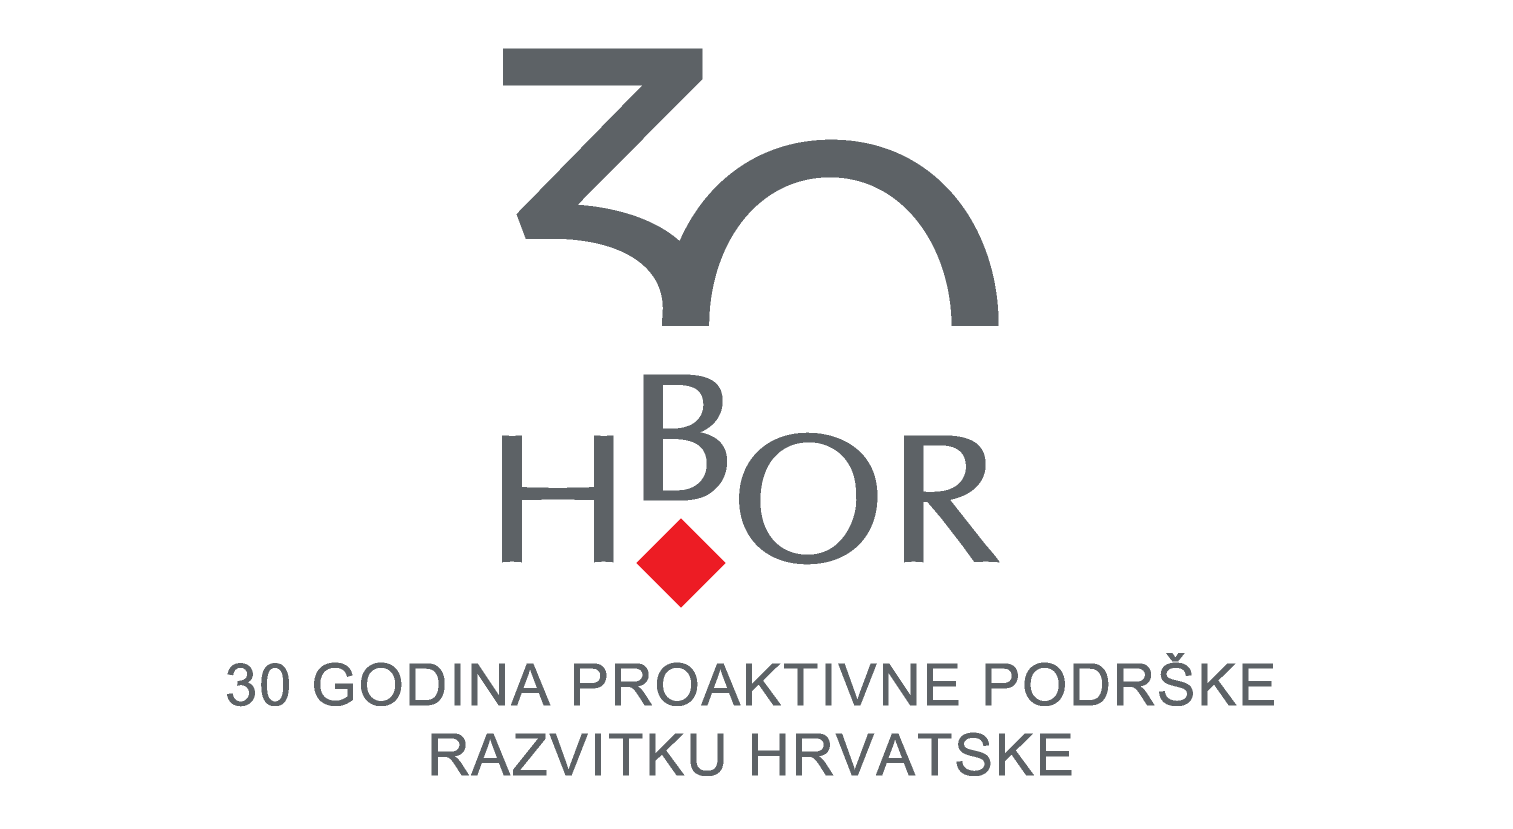 logo HBOR 30 CMYK 4-01 (2)